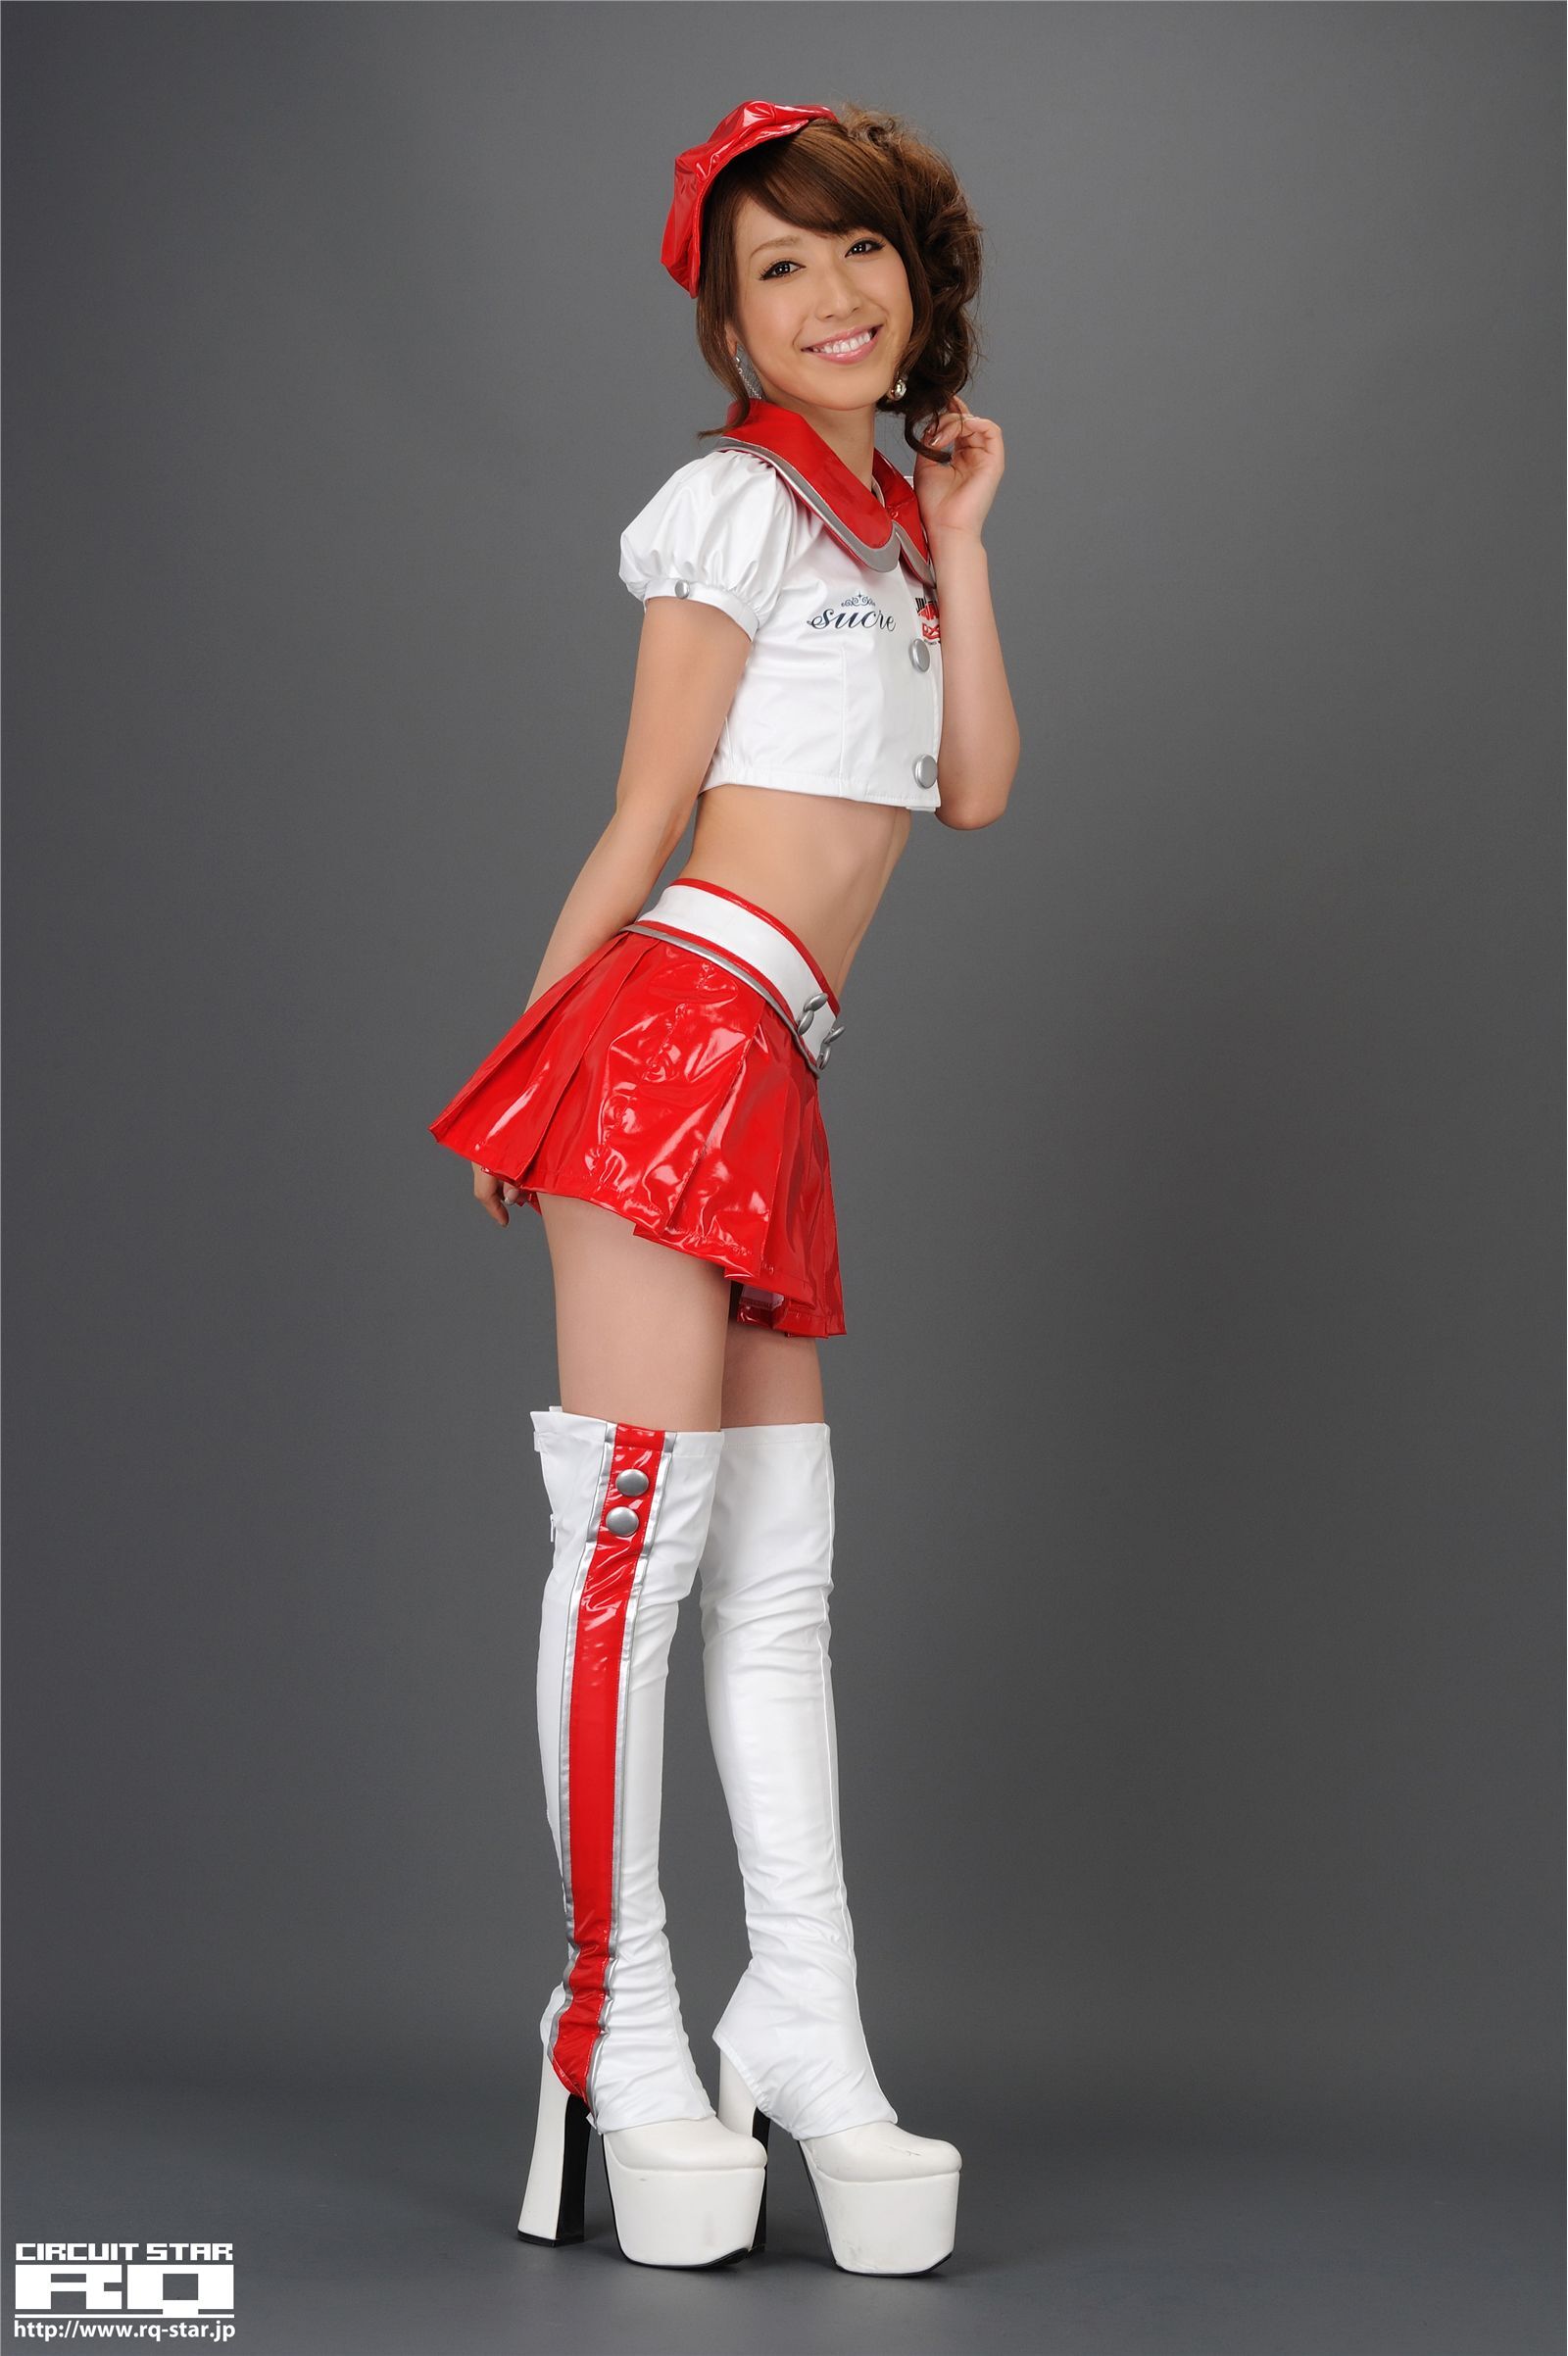 [rq-star] [06-20] no.00506 the temptation of Shimizu beauty model uniform